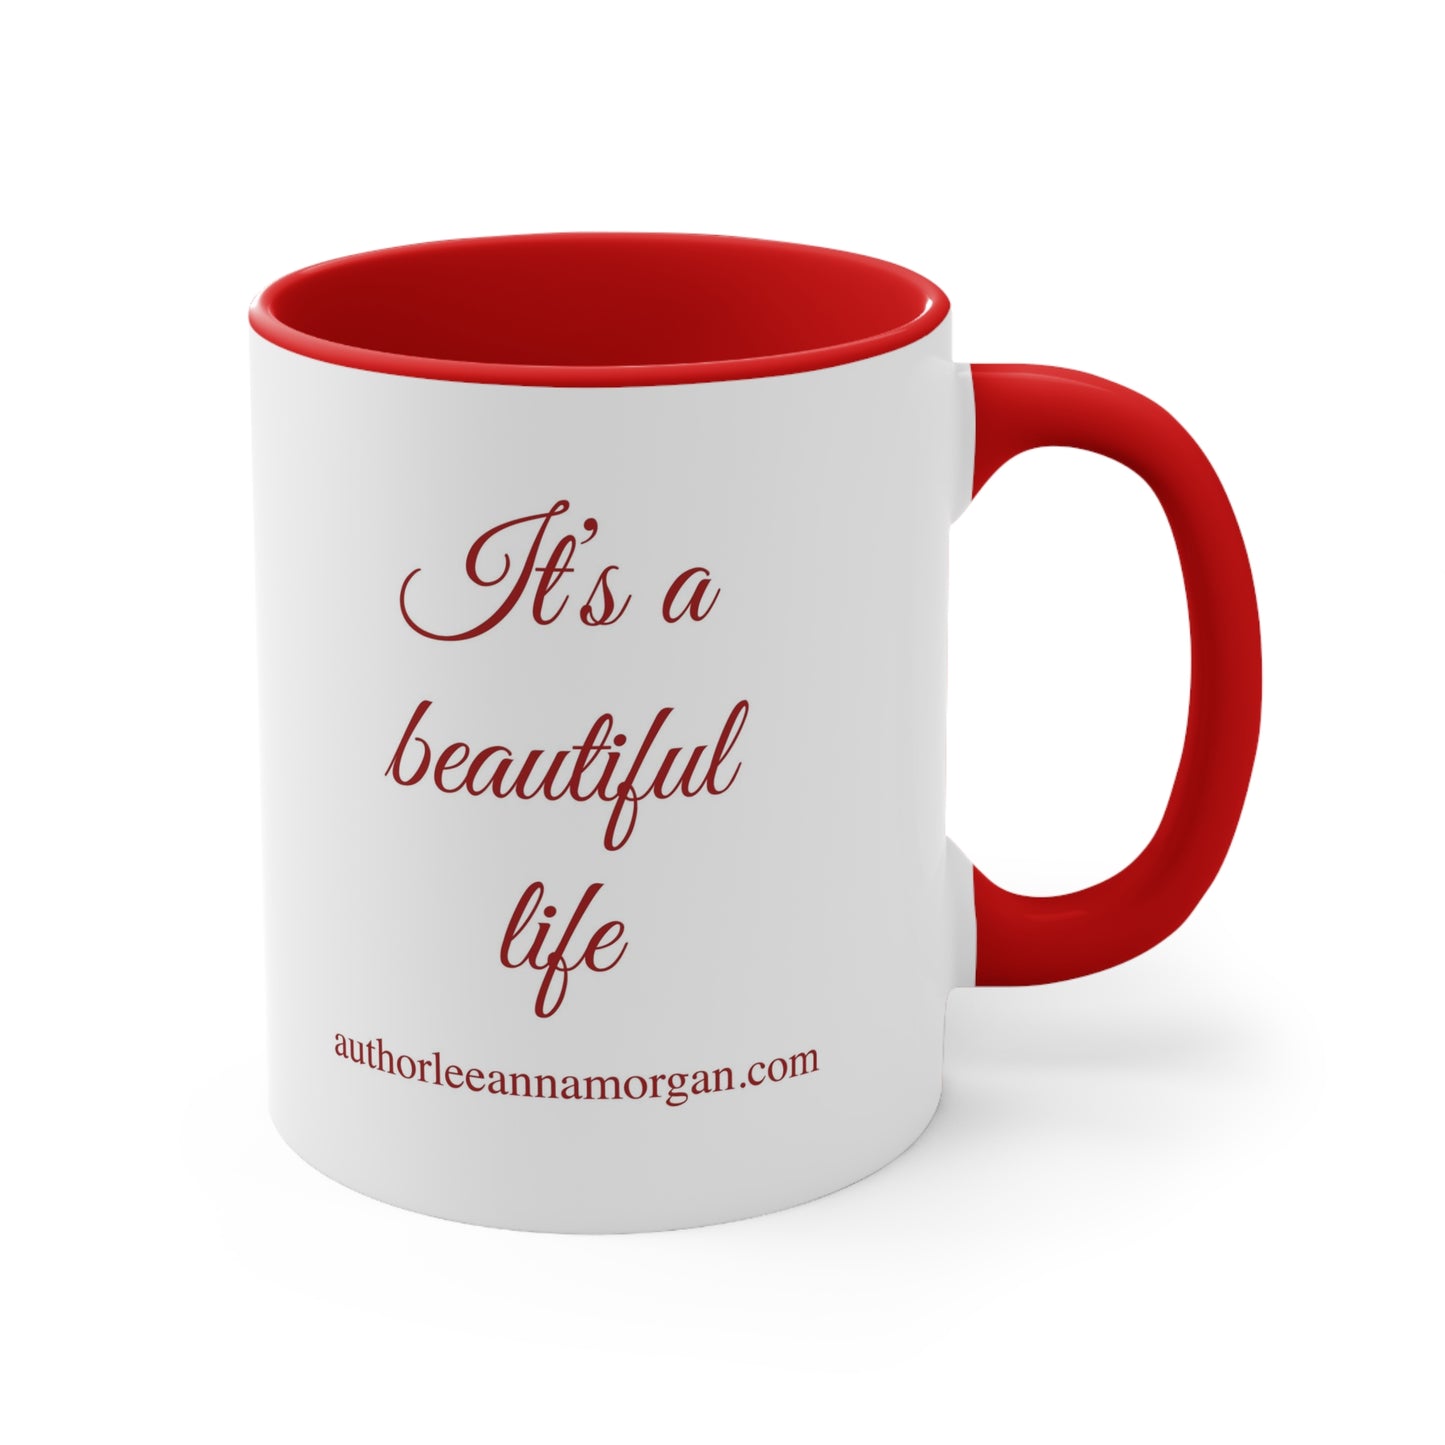 Coming Home Coffee Mug - It's a beautiful life!